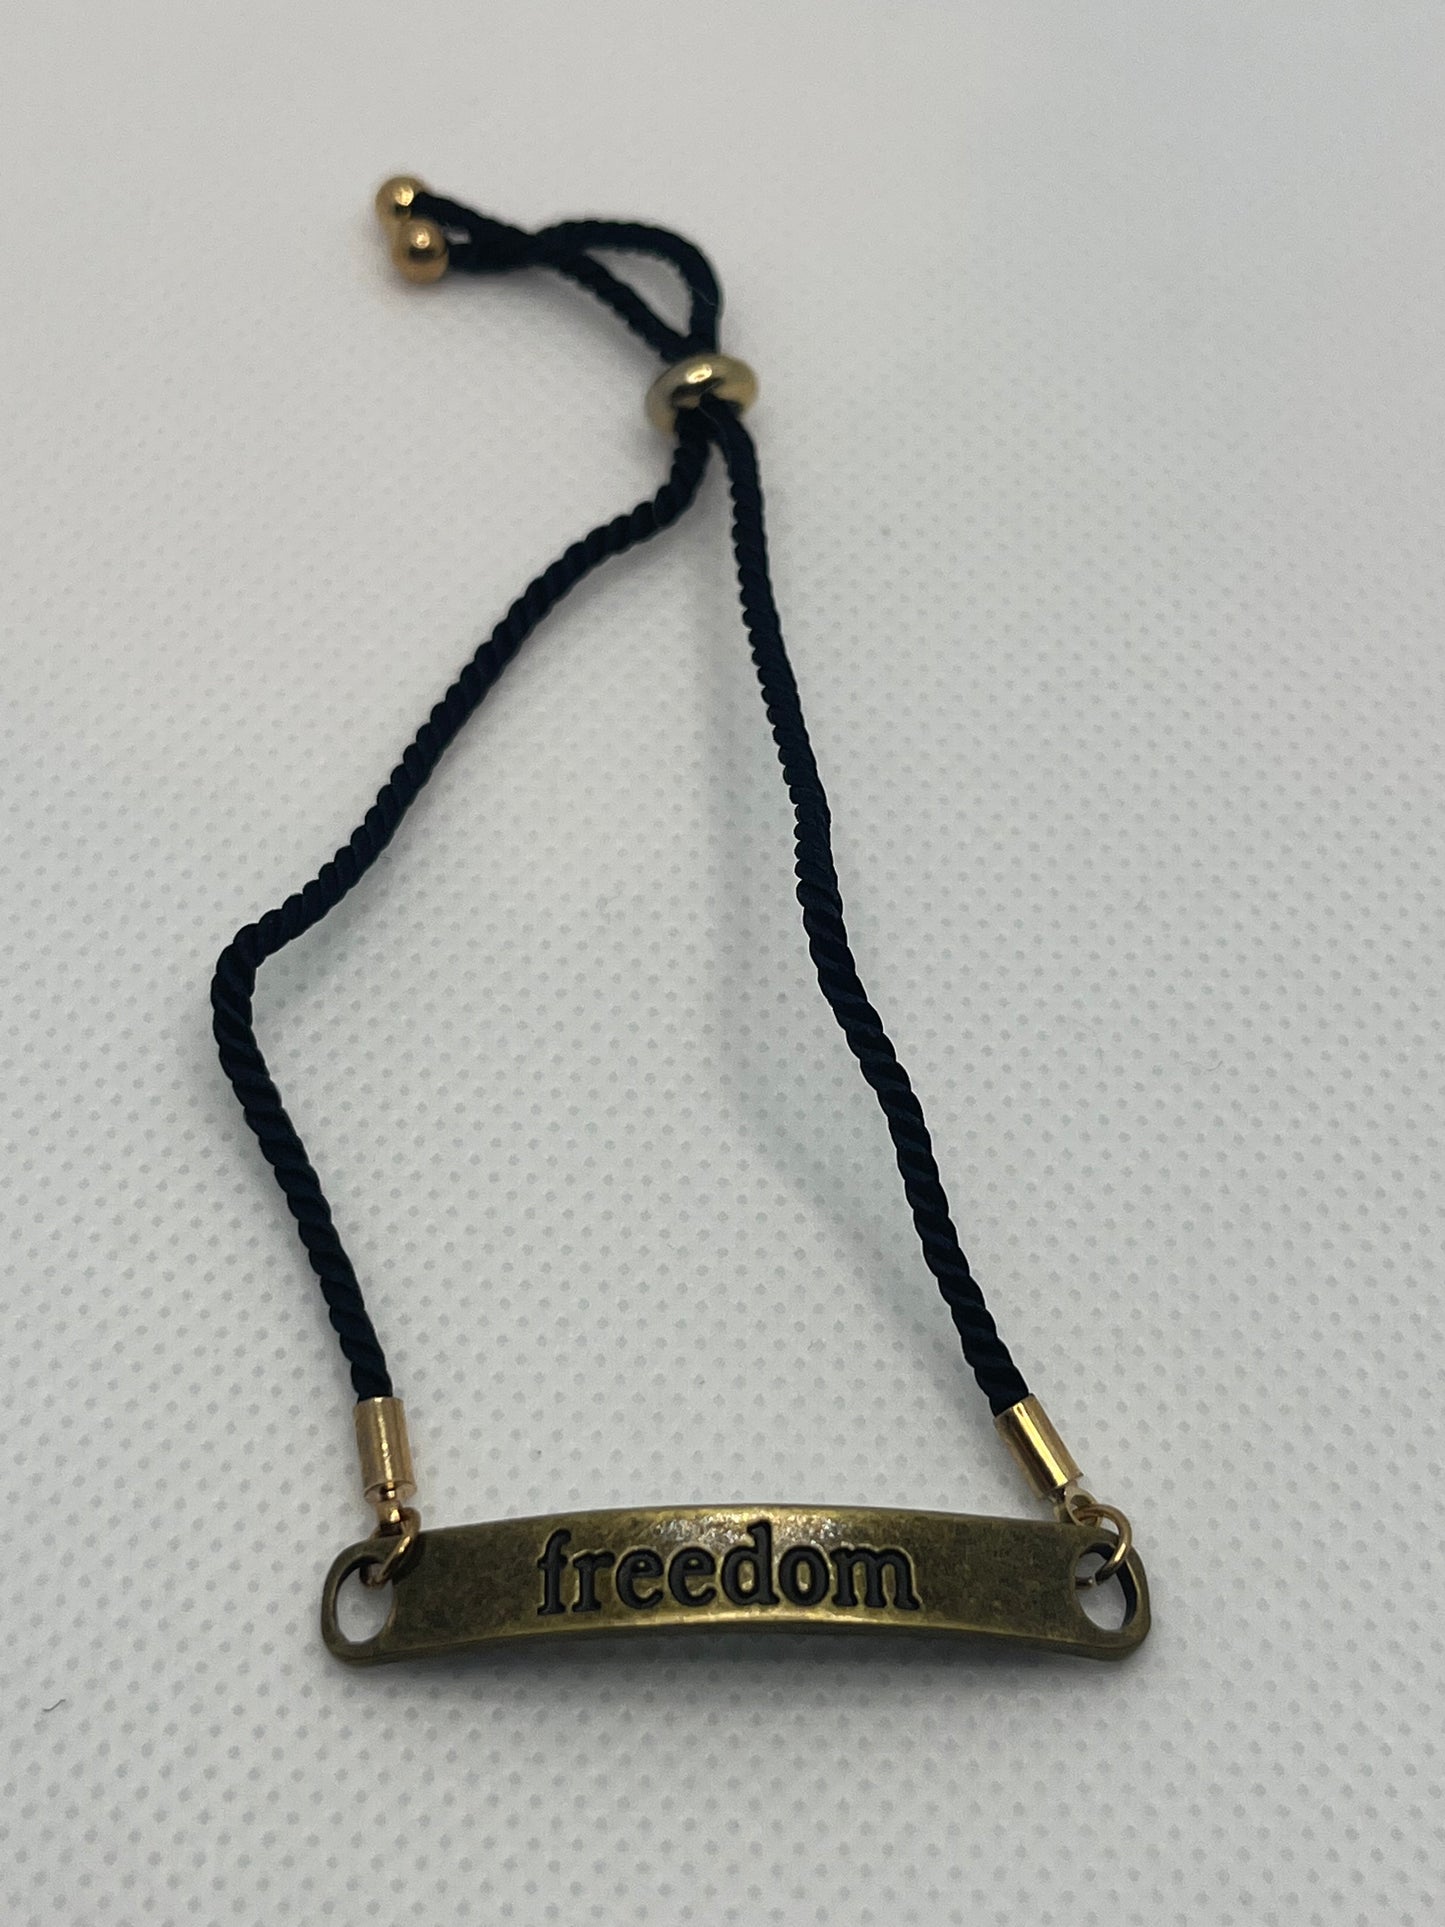 Freedom-Corded Character Bracelet